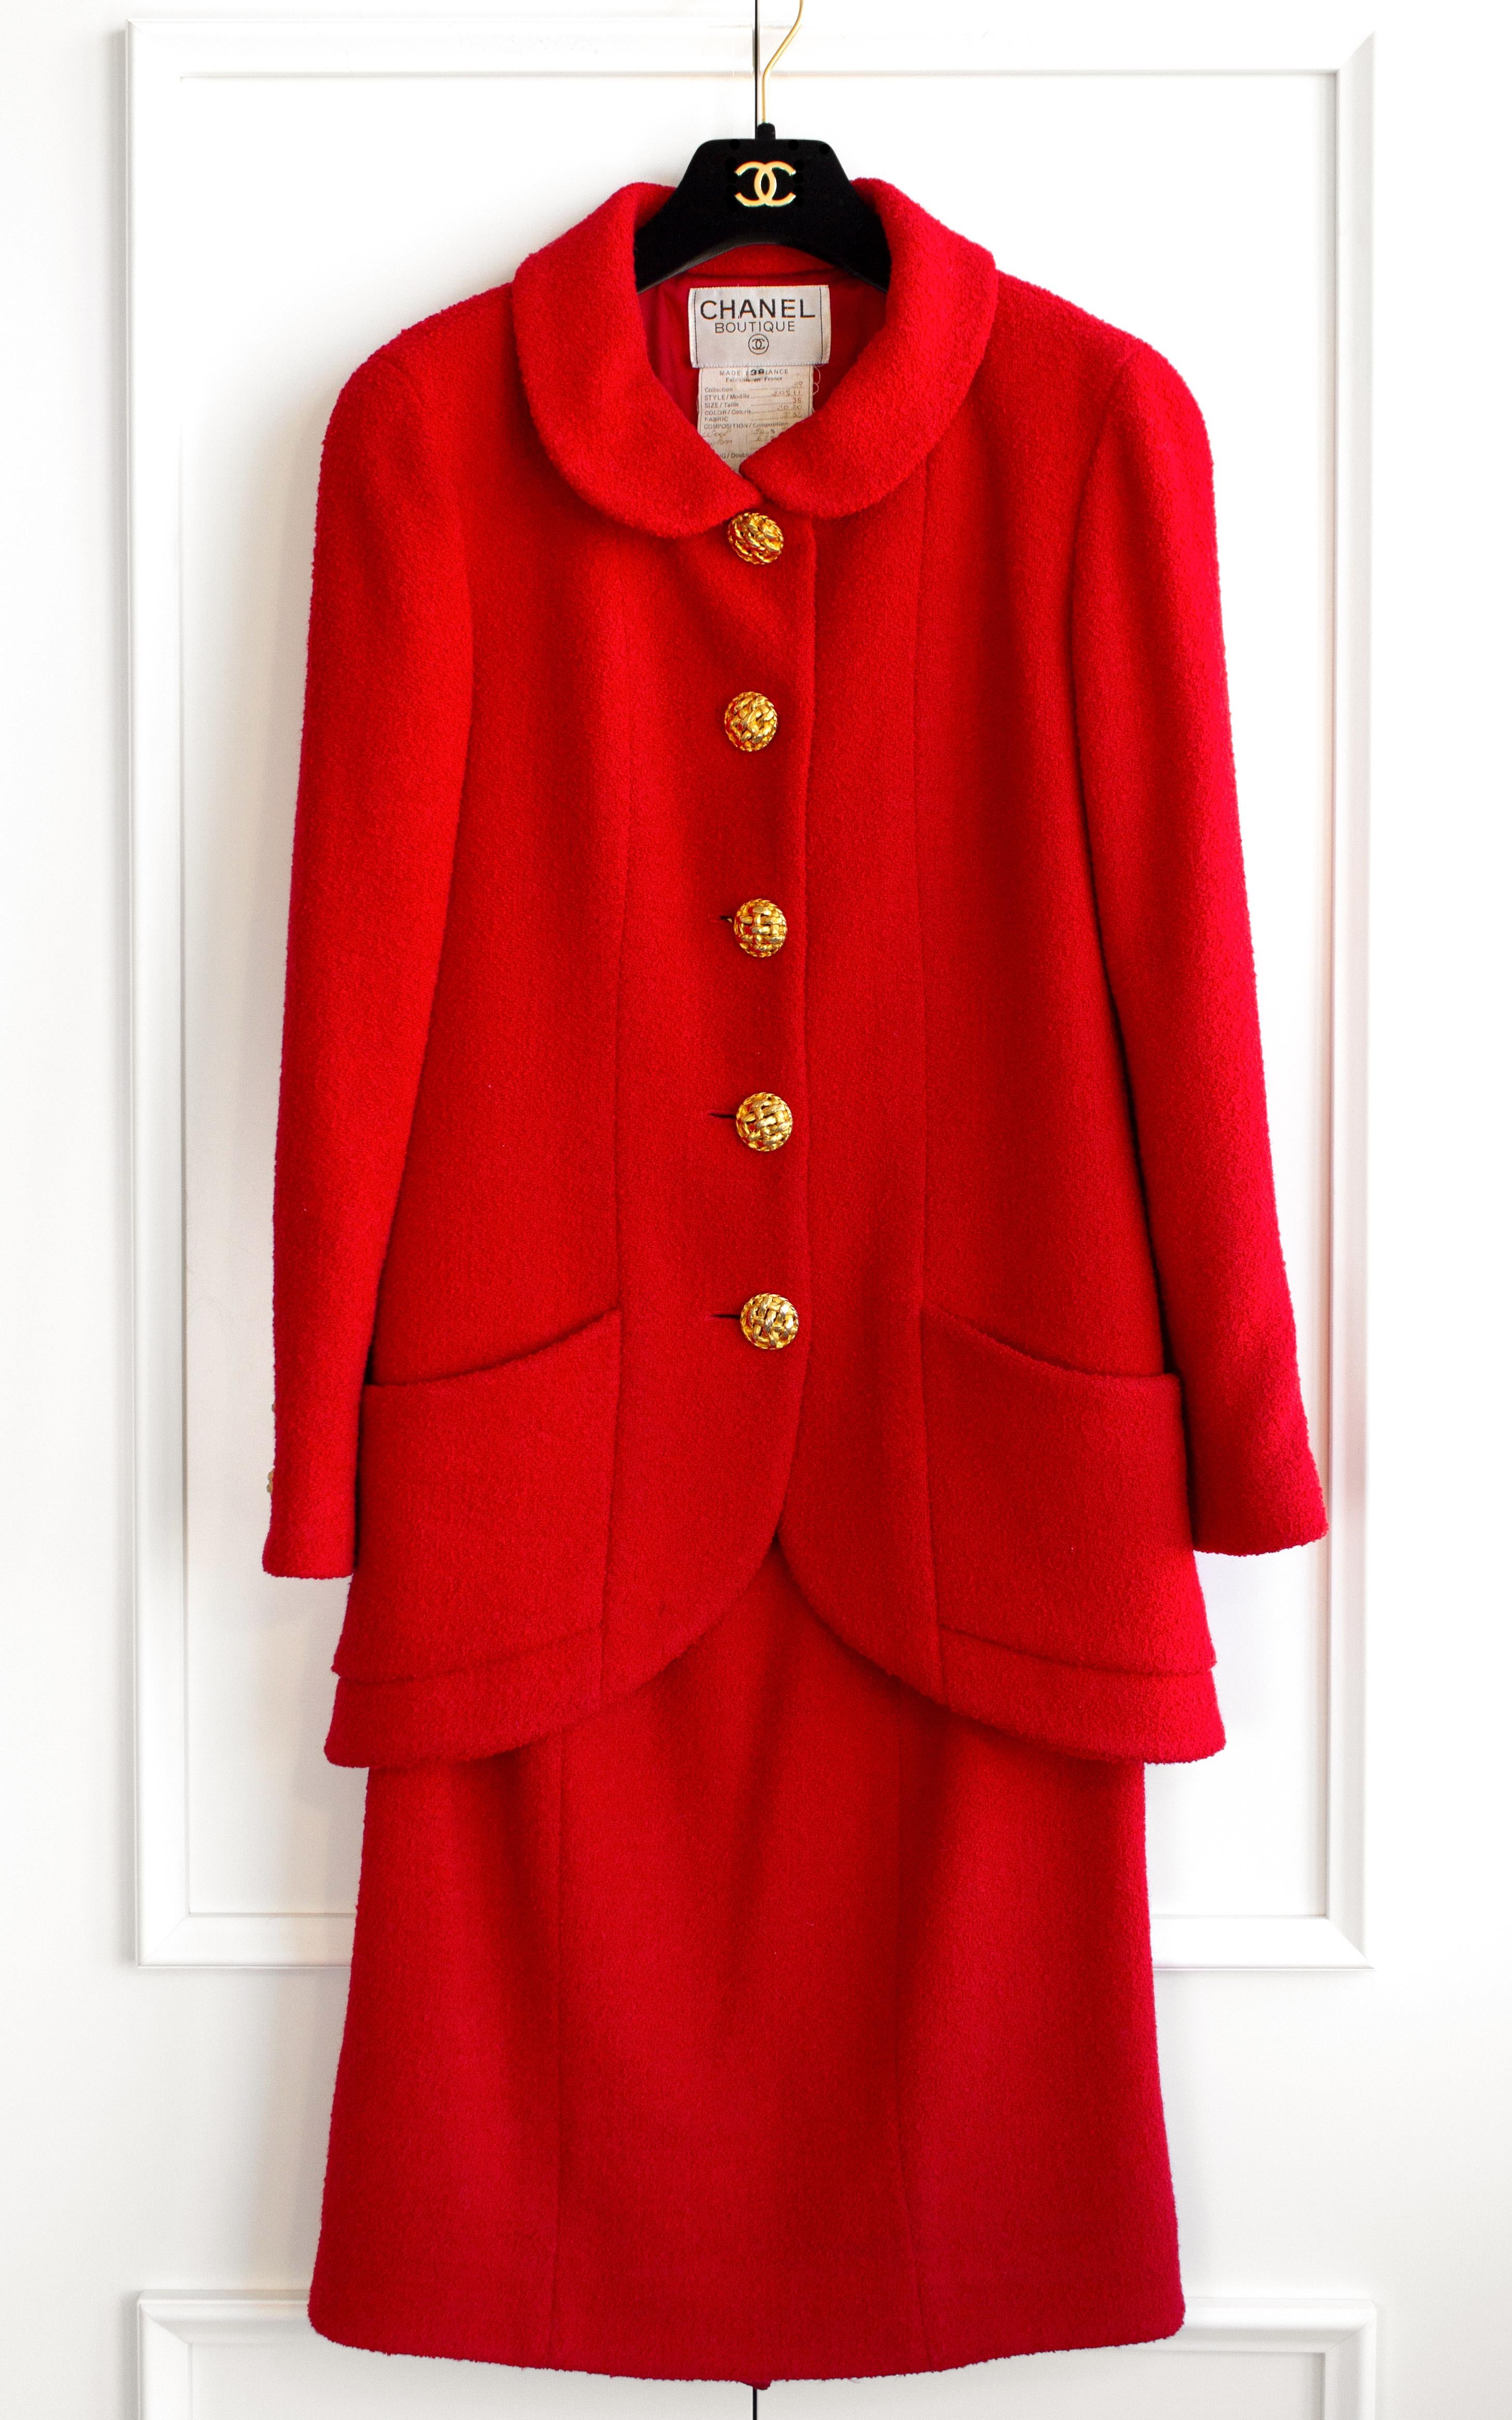 Women's Chanel Vintage Fall/Winter 1992 Runway Parisian Red Gold Tweed Jacket Skirt Suit